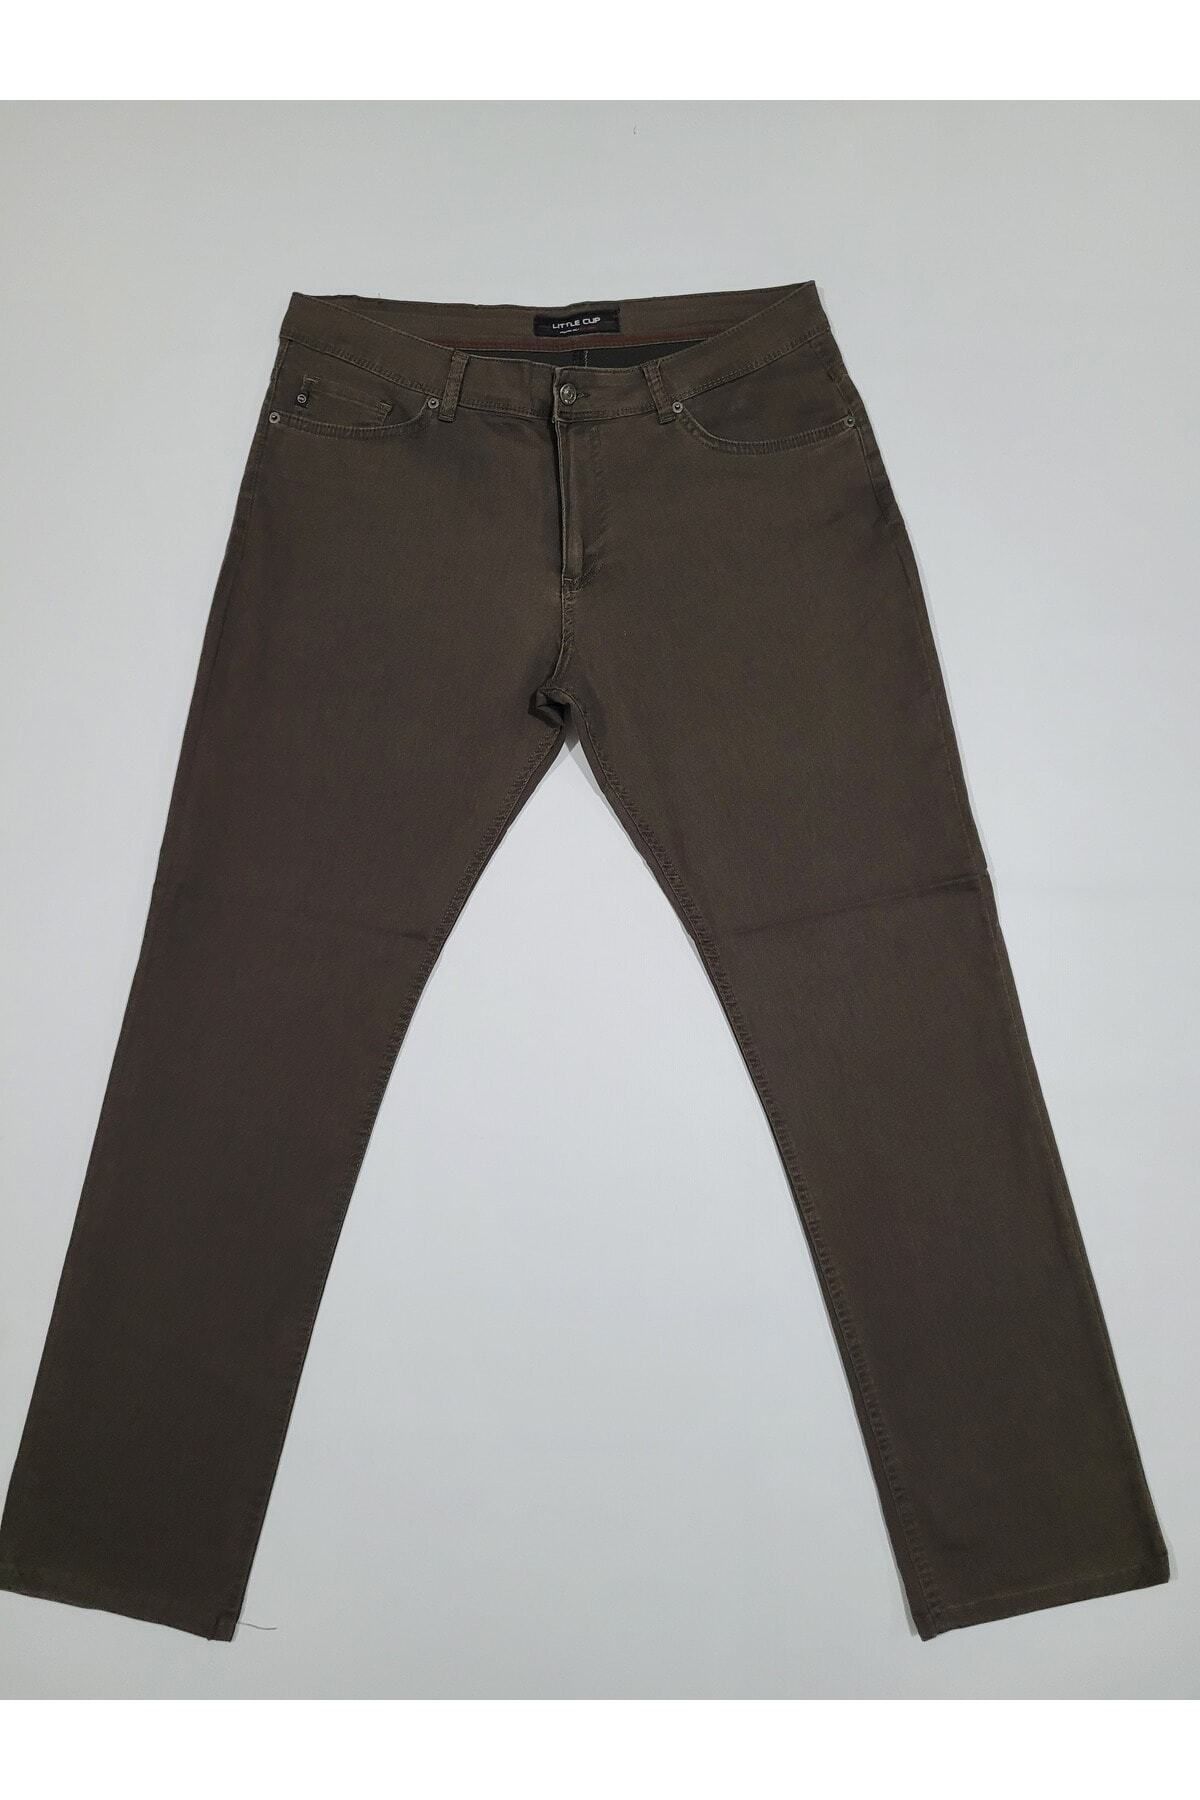 LTC Jeans 38 Beden Ince Kahverengi Erkek Keten Pantolon